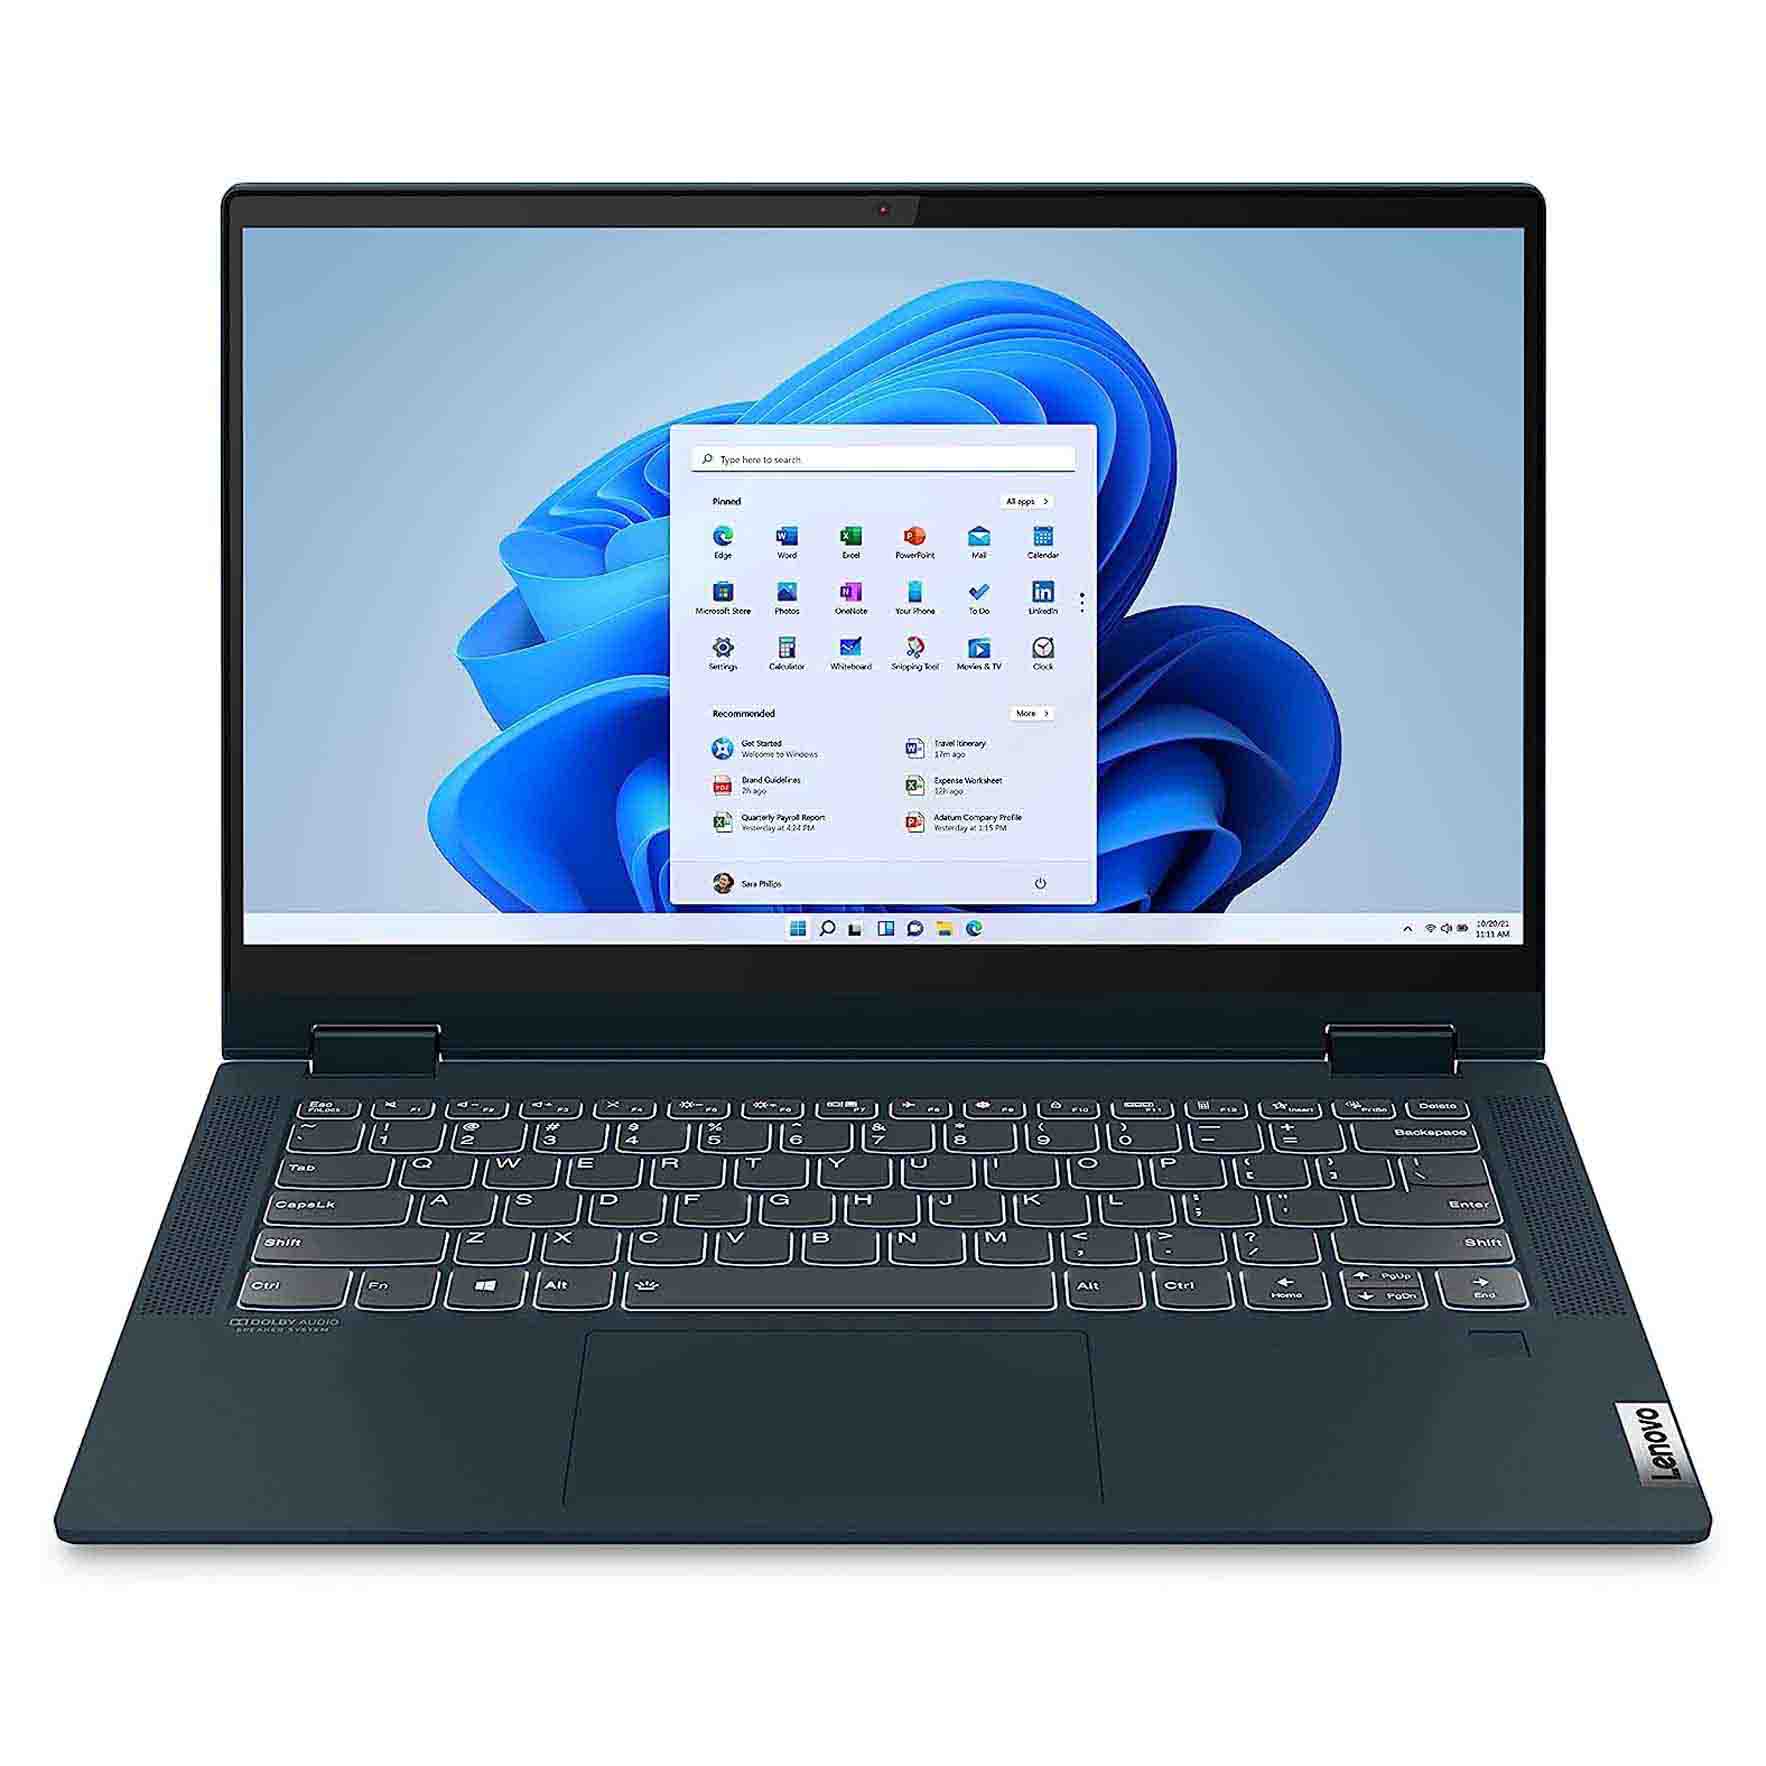 Lenovo IdeaPad Flex 5 Touchscreen 2-in-1 Laptop in abyss blue